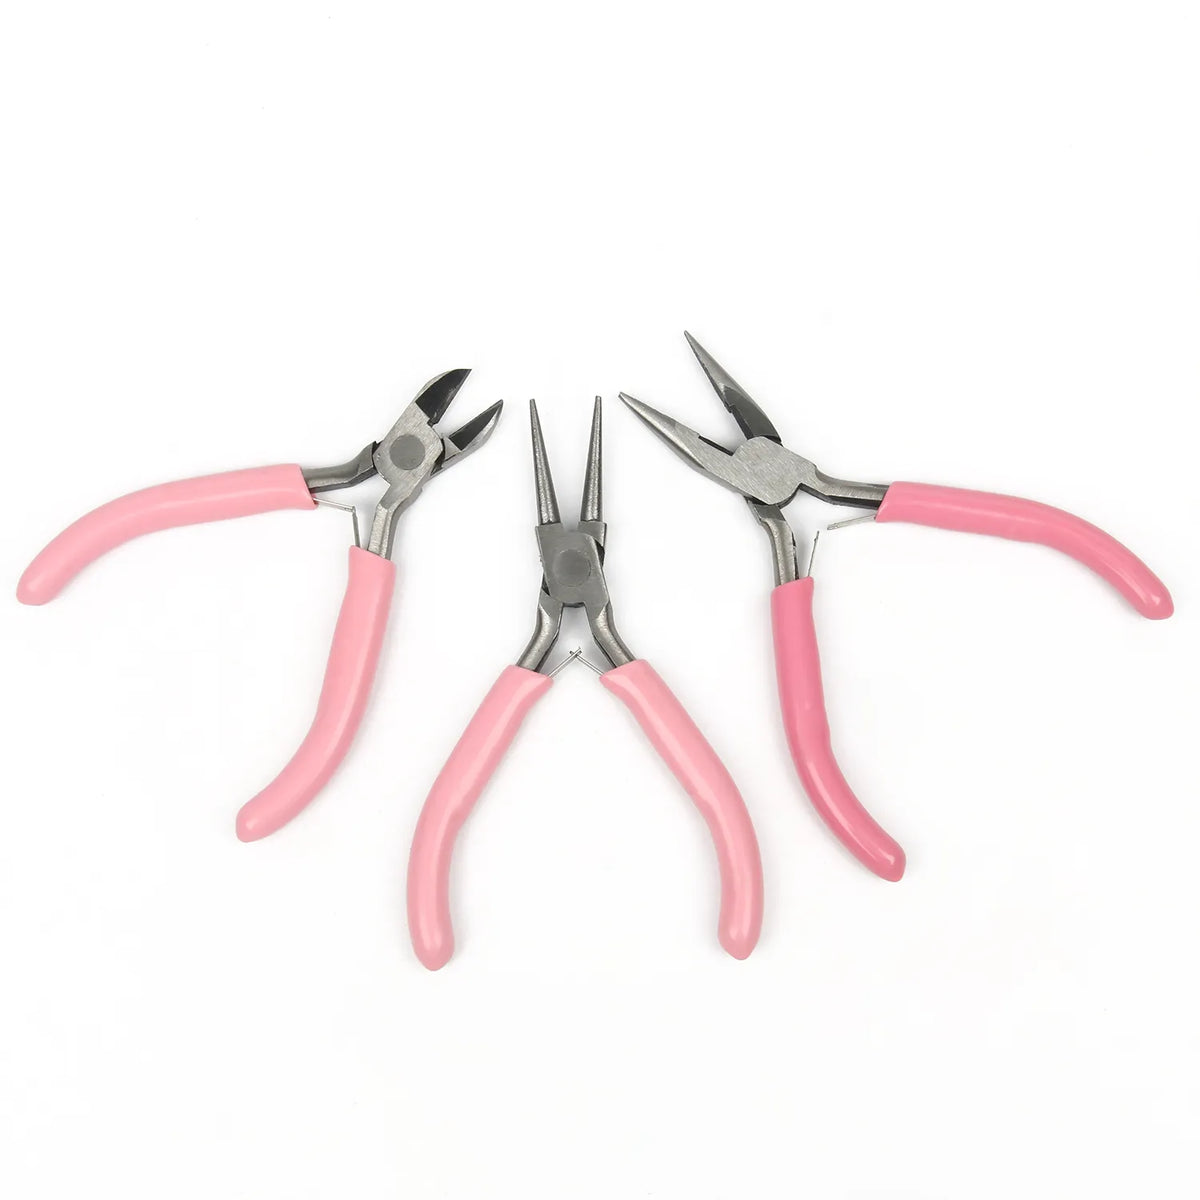 Pink Metal Mini Pliers Set - Diagonal, Round & Bent Nose for DIY Jewelry